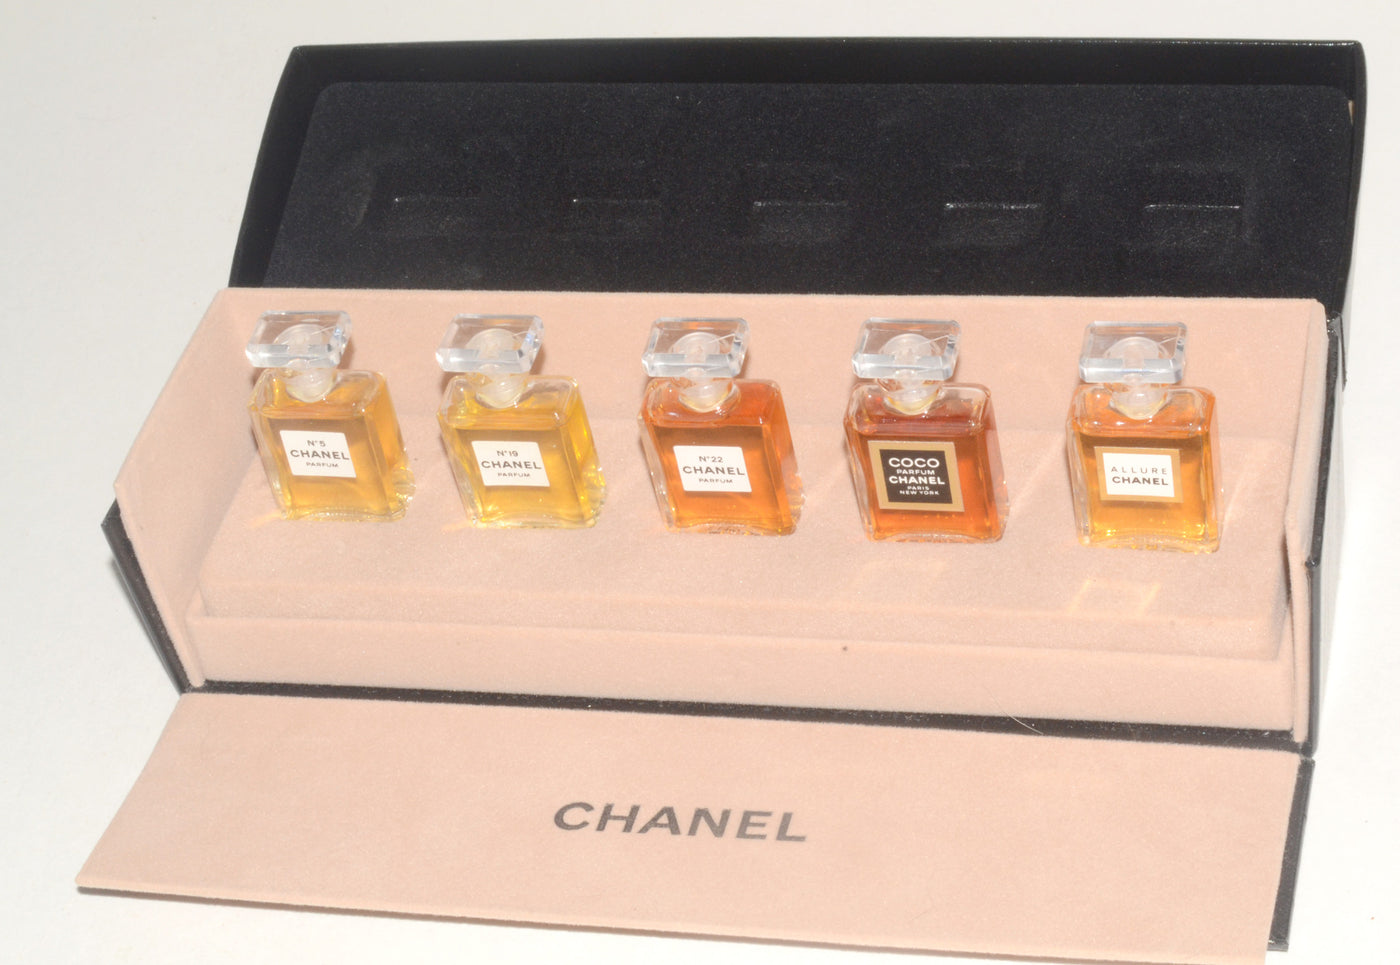 Chanel Perfume Miniature Boxed Set